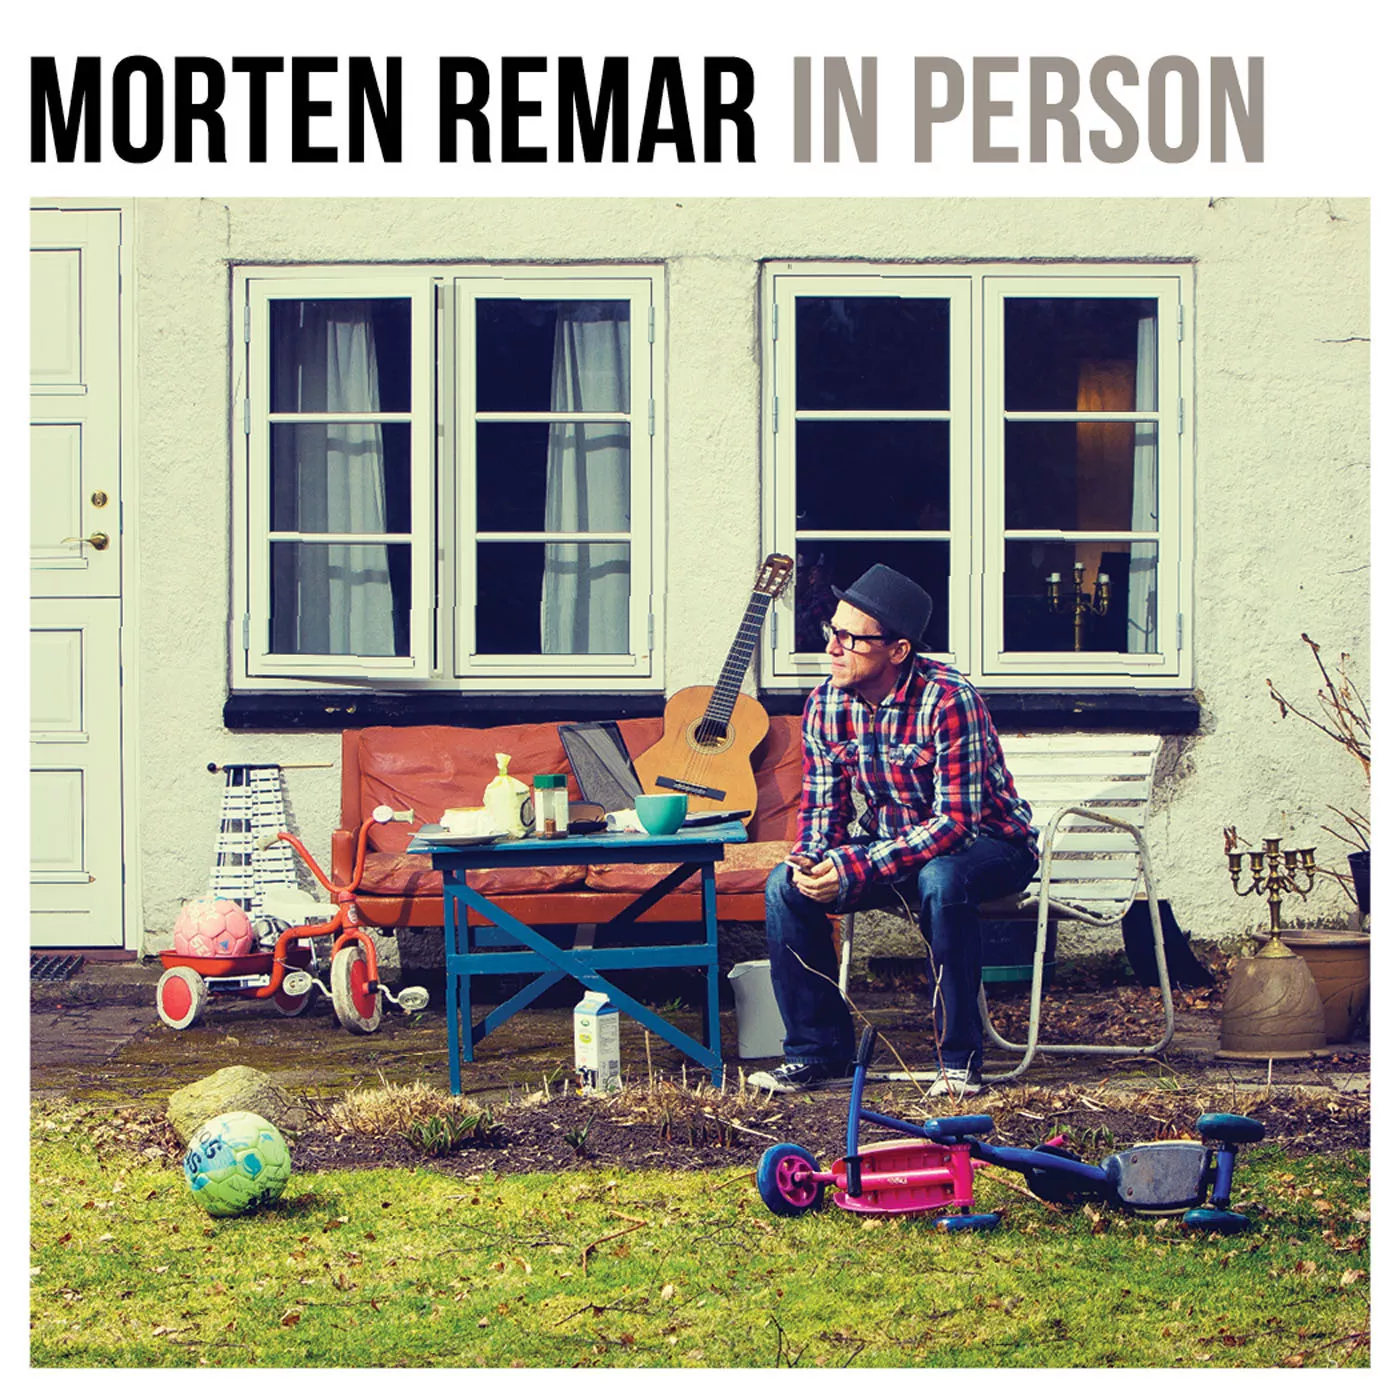 In Person - Morten Remar